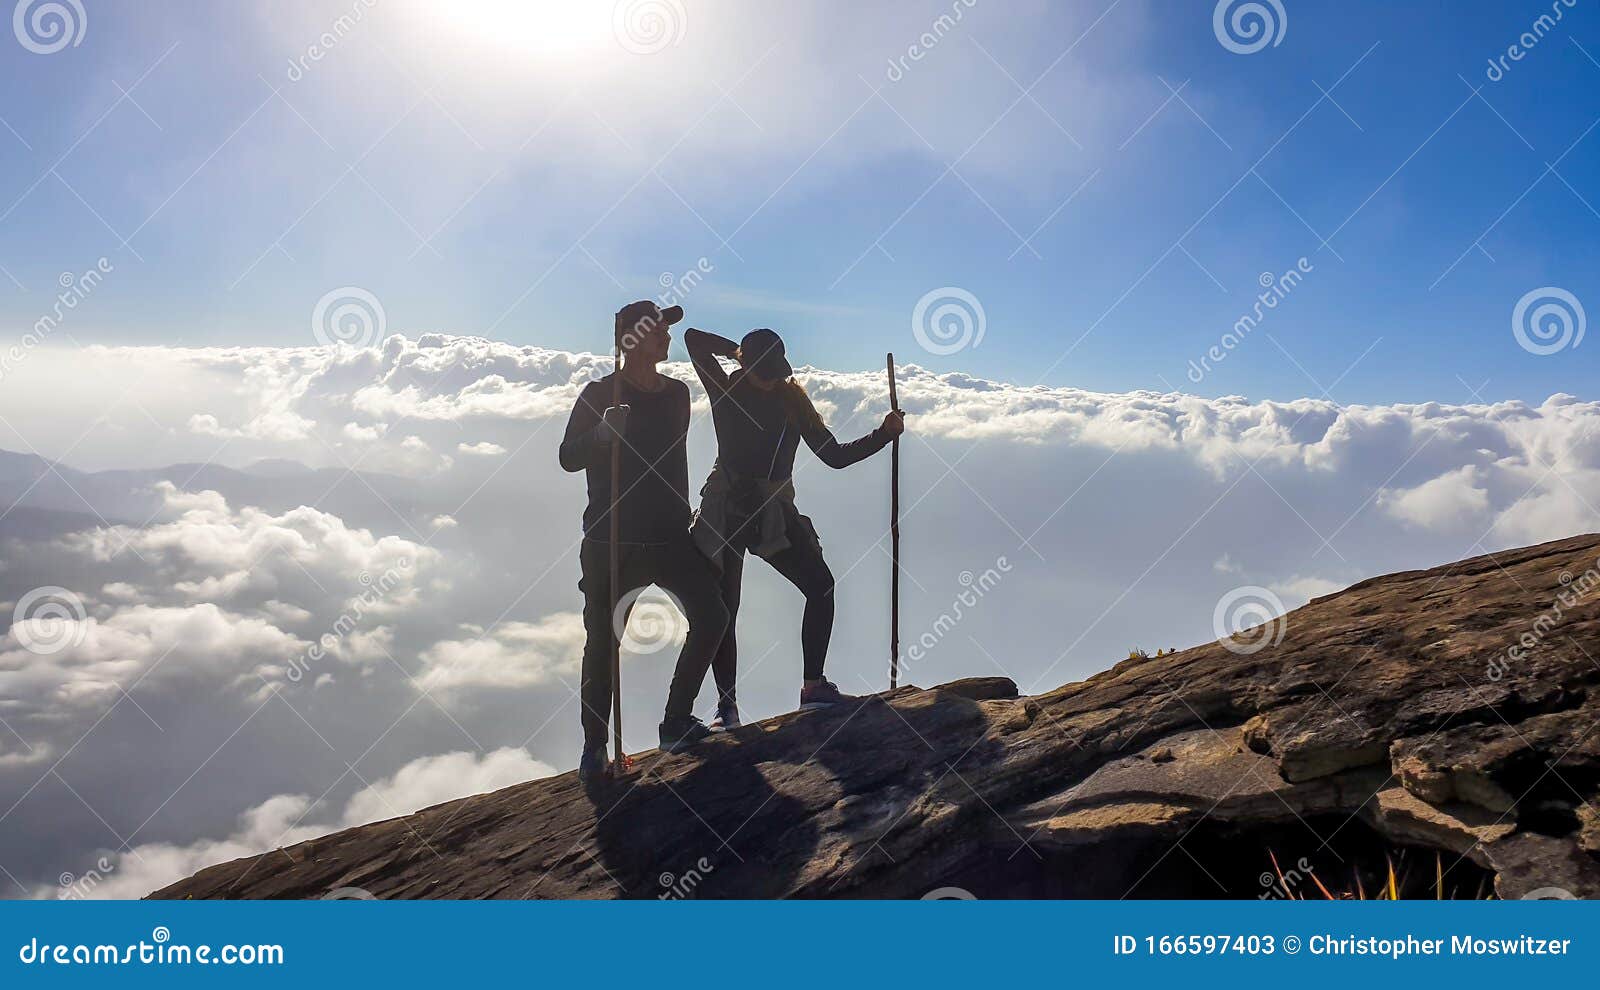 bajawa - a couple walking above the clouds